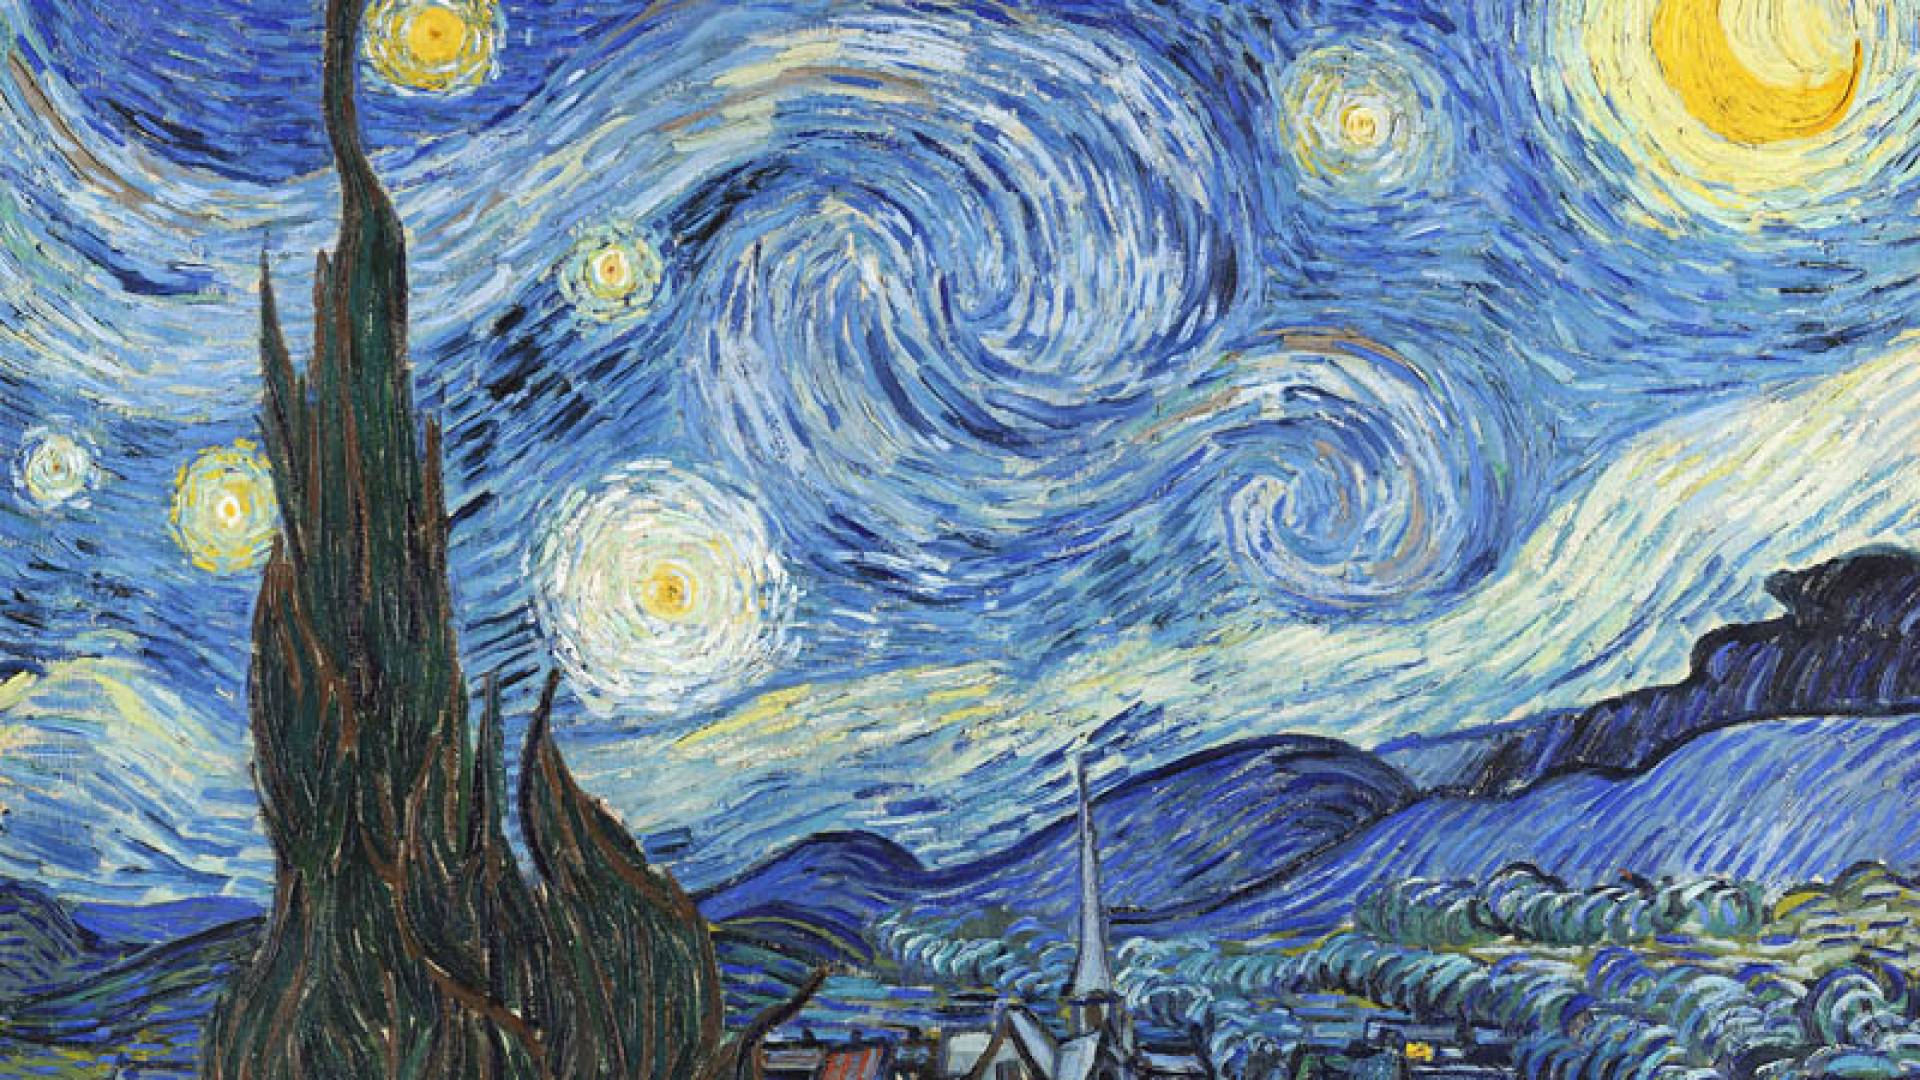 MUSEUM OF MODERN ART, Starry Night By Van Gogh